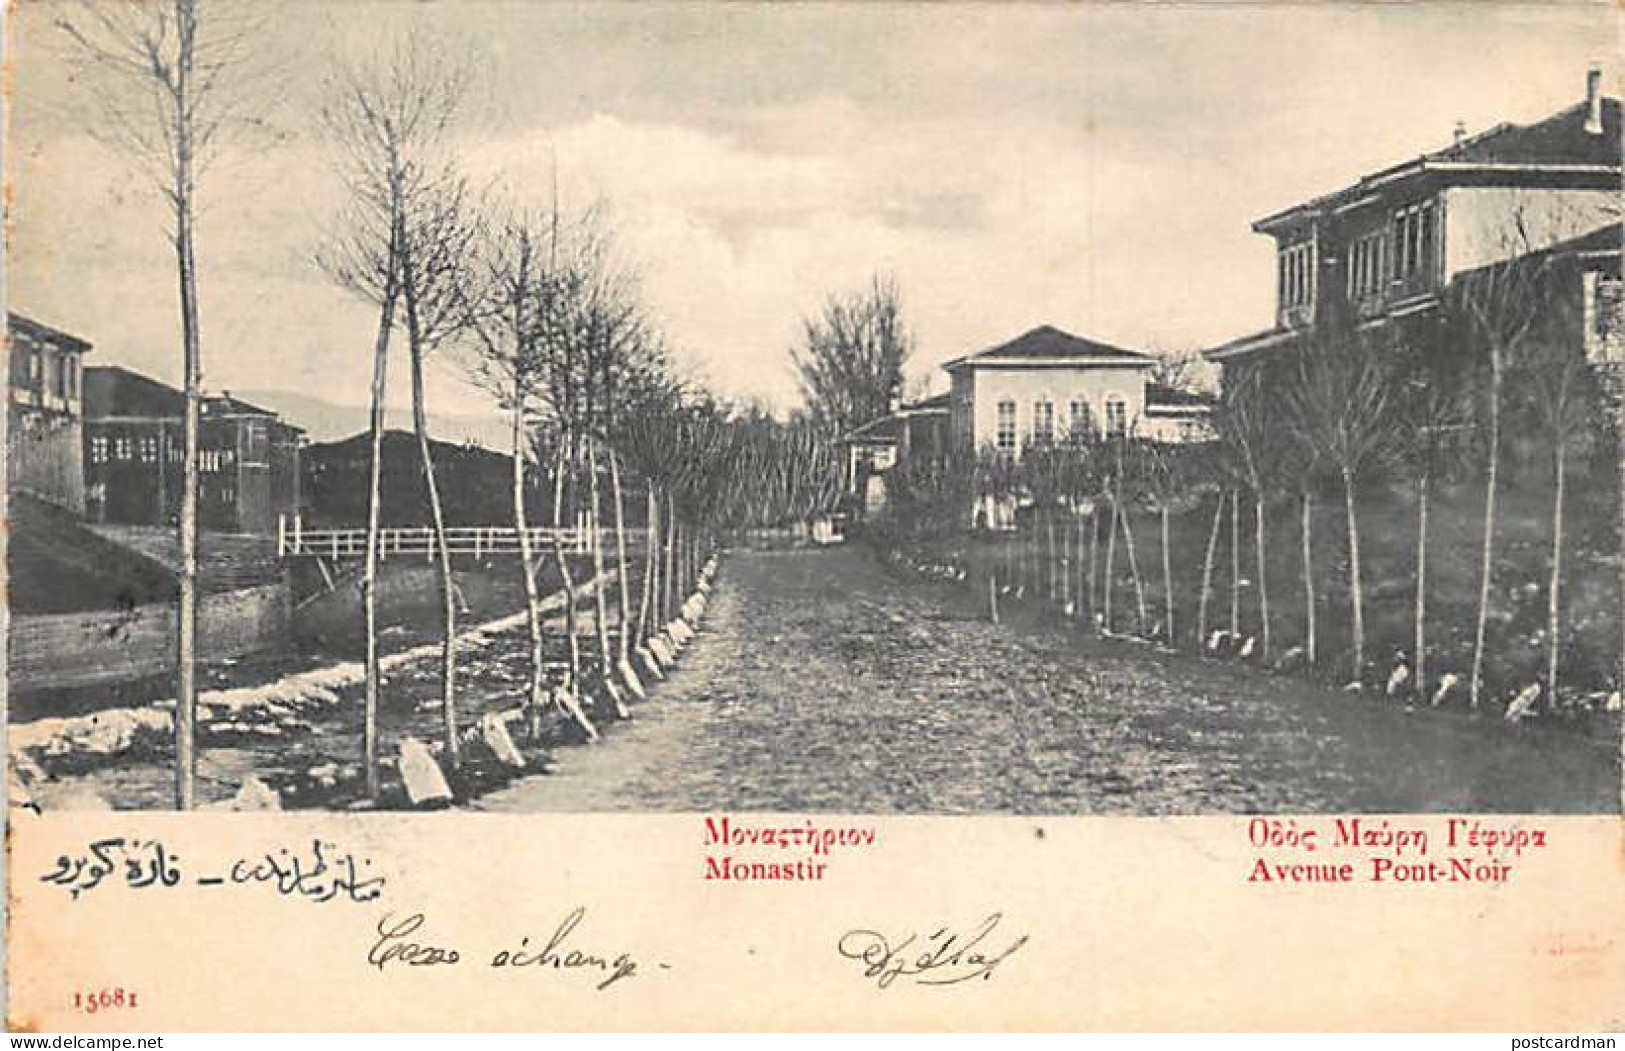 Macedonia - MONASTIR - Avenue Pont-Noir - SEE STAMPS And POSTMARKS - Publ. G. Zalli 15681. - North Macedonia